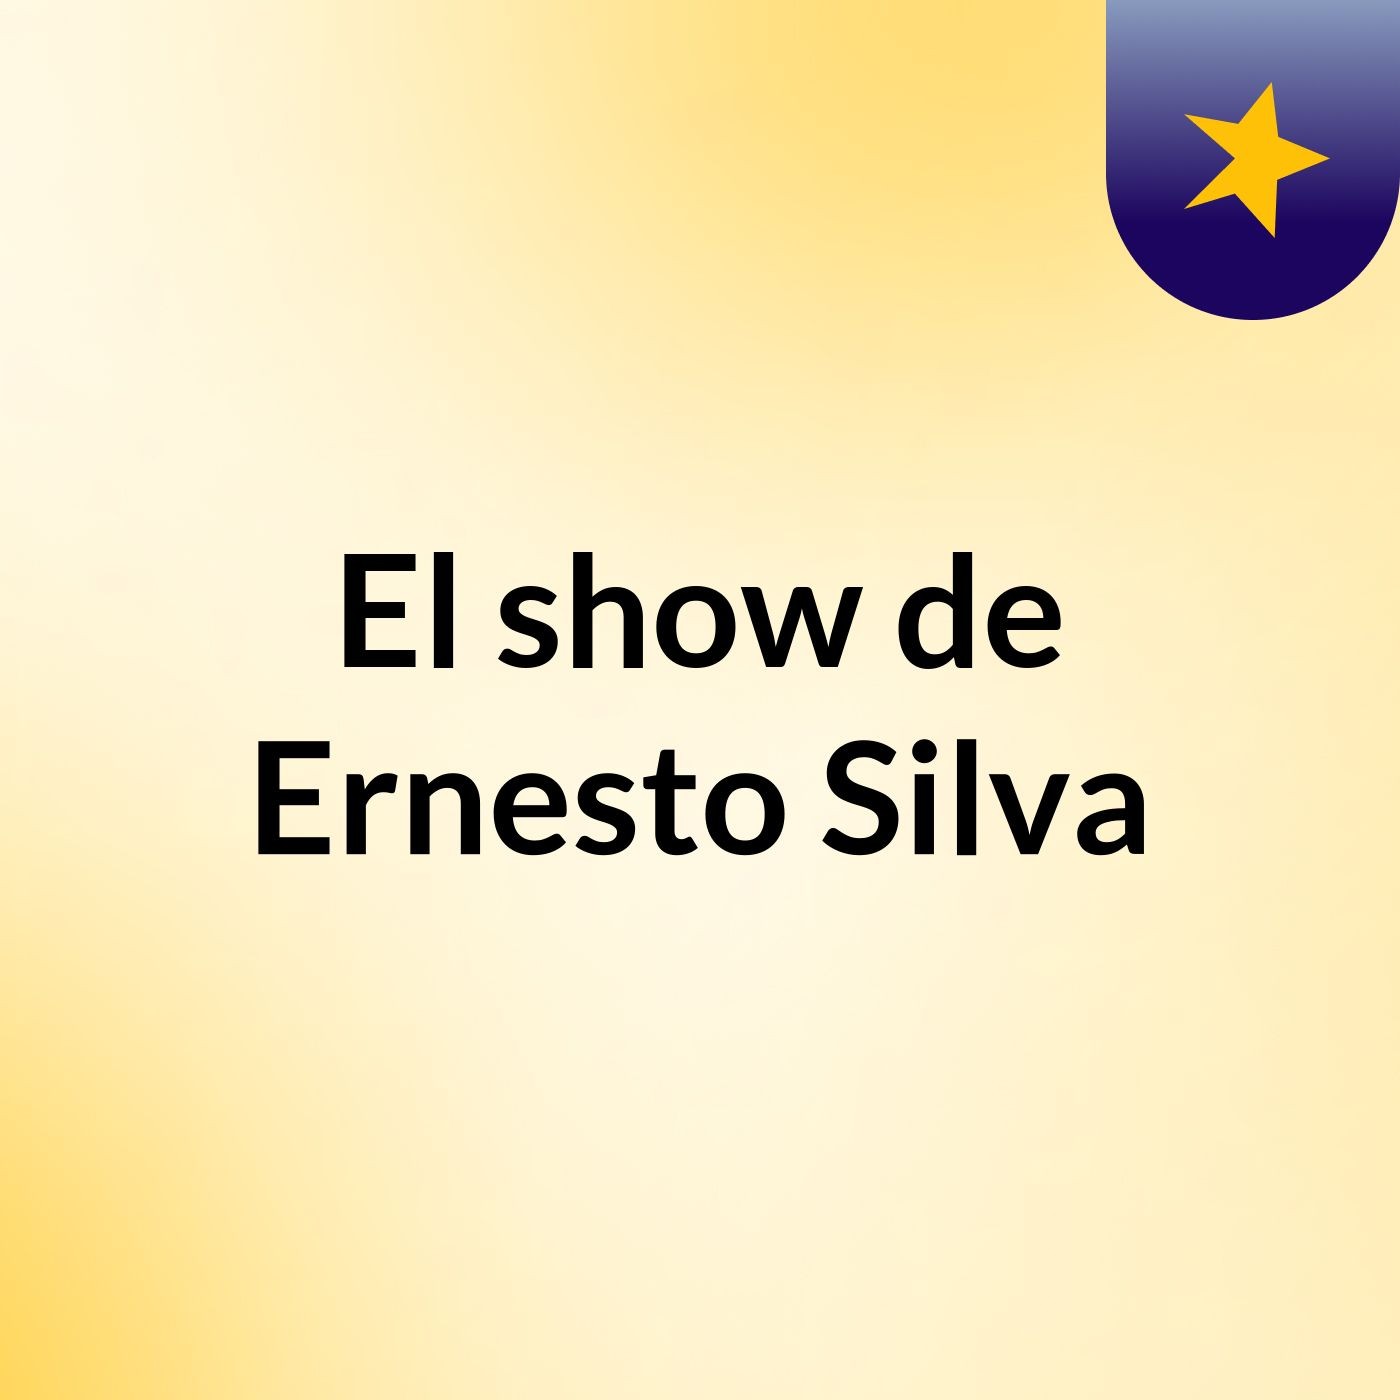 El show de Ernesto Silva